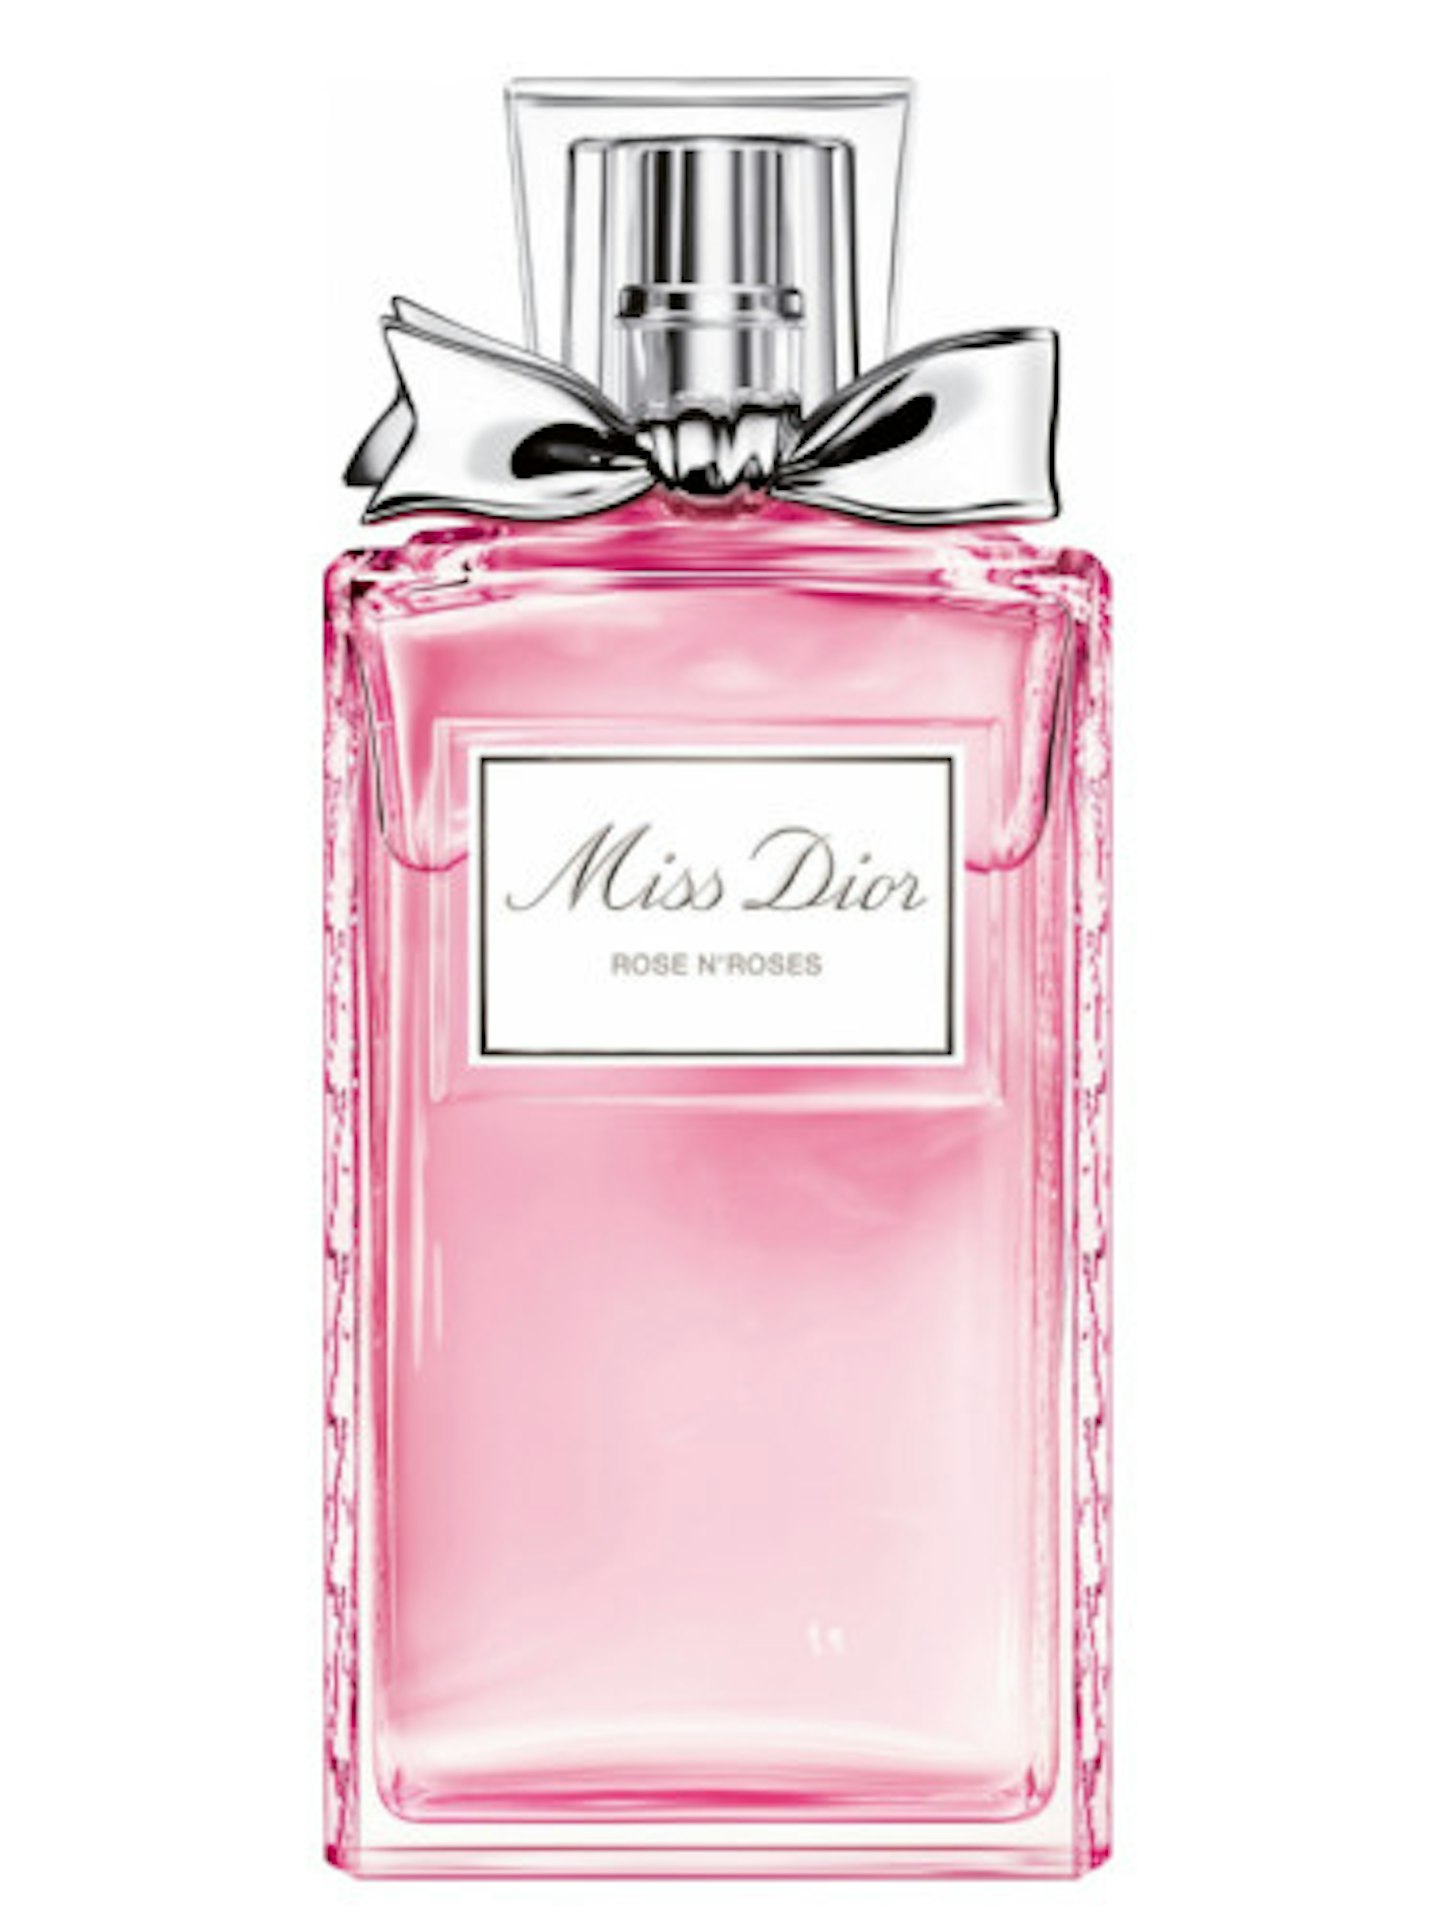 Miss Dior, Rose N'Roses, £75.20 for 100ml